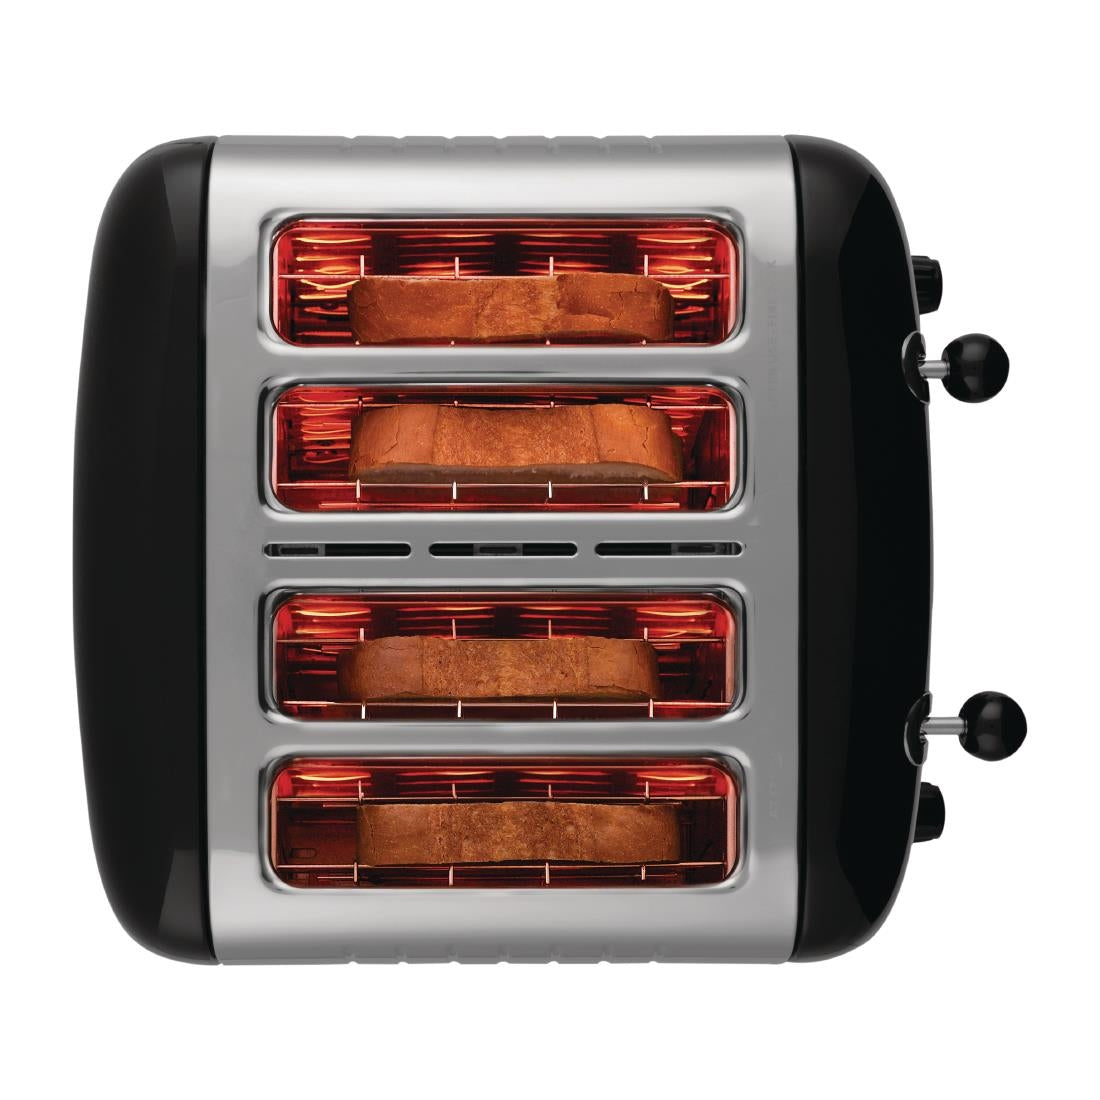 GF336 Dualit 4 Slice Lite Toaster Black 46205 JD Catering Equipment Solutions Ltd